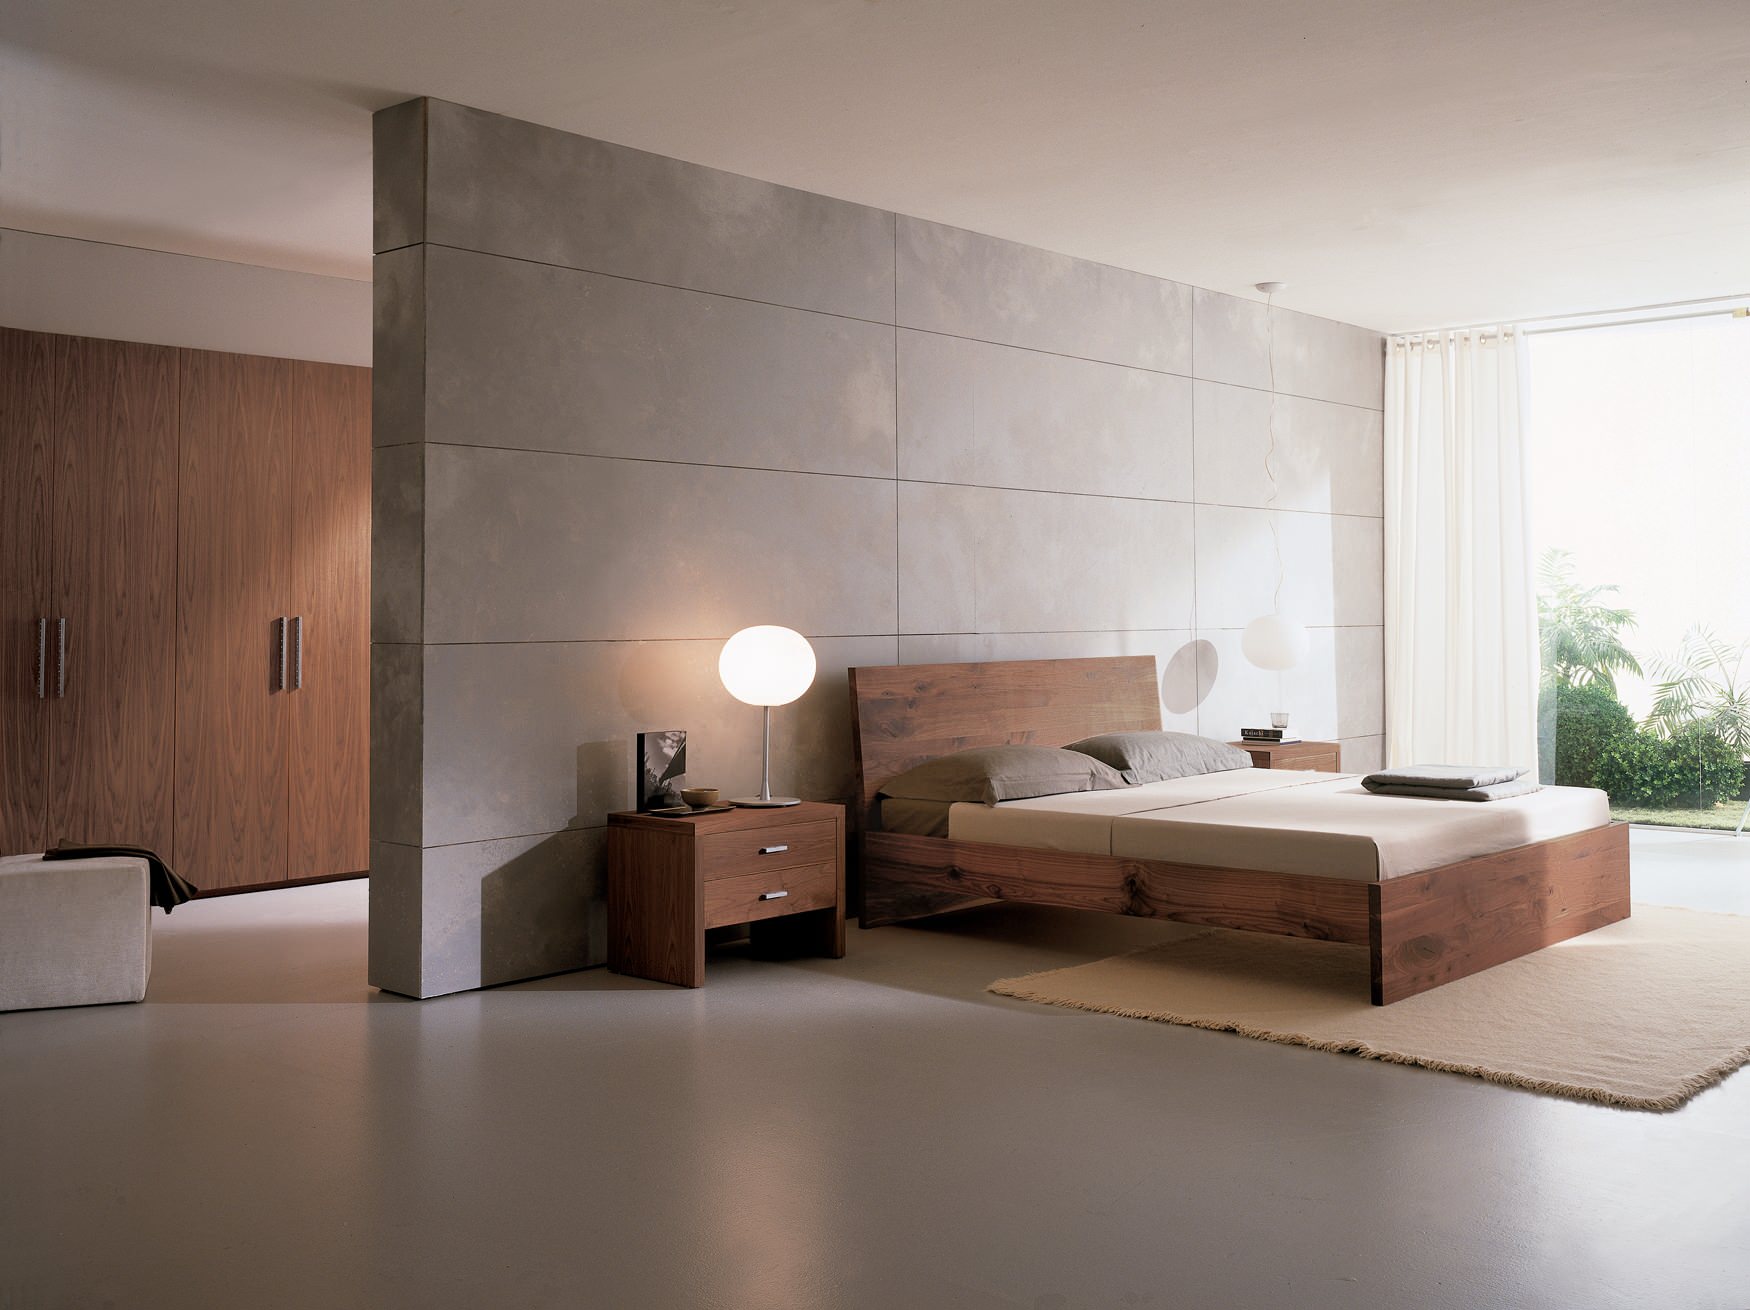 Ella Home Ideas: Houzz Modern Bedroom Ideas - 75 Beautiful Modern ...